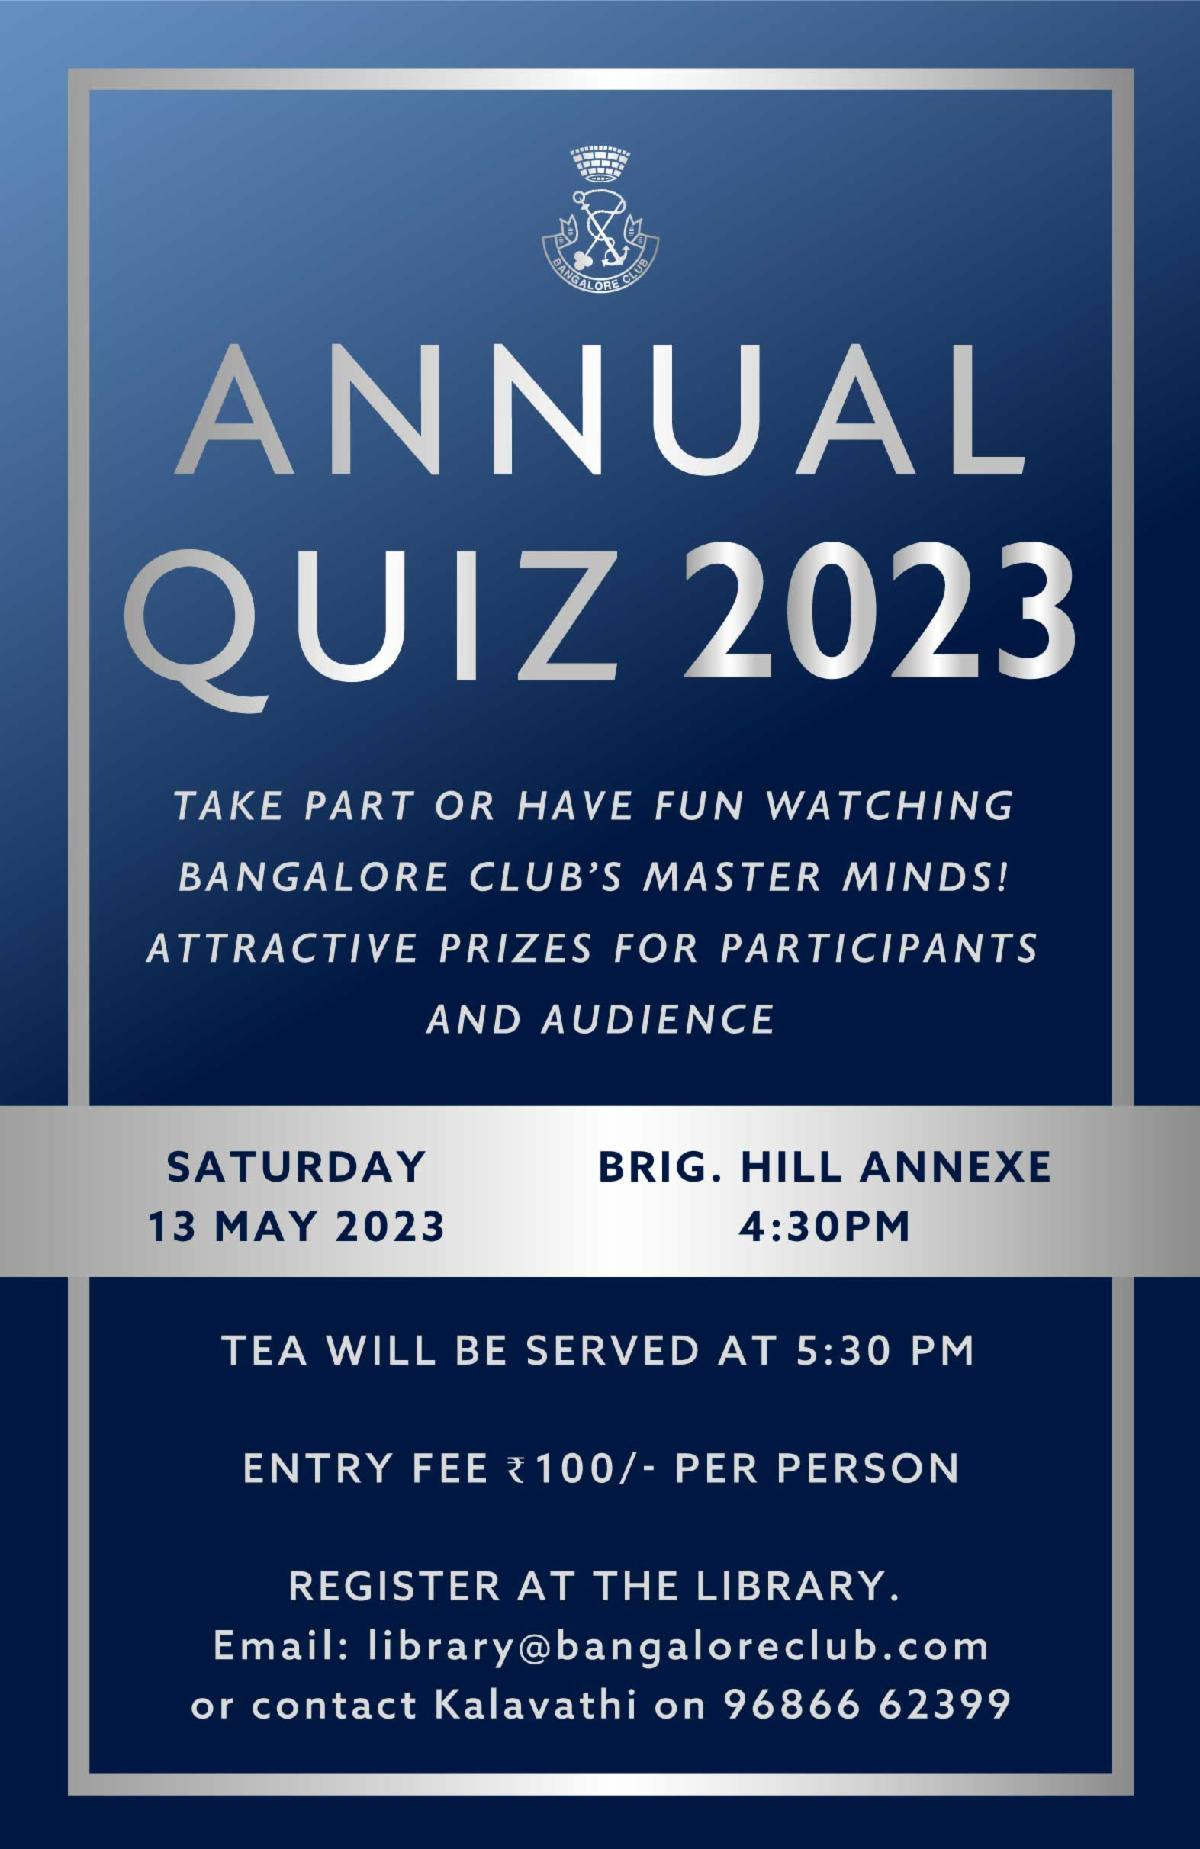 The Bangalore Club